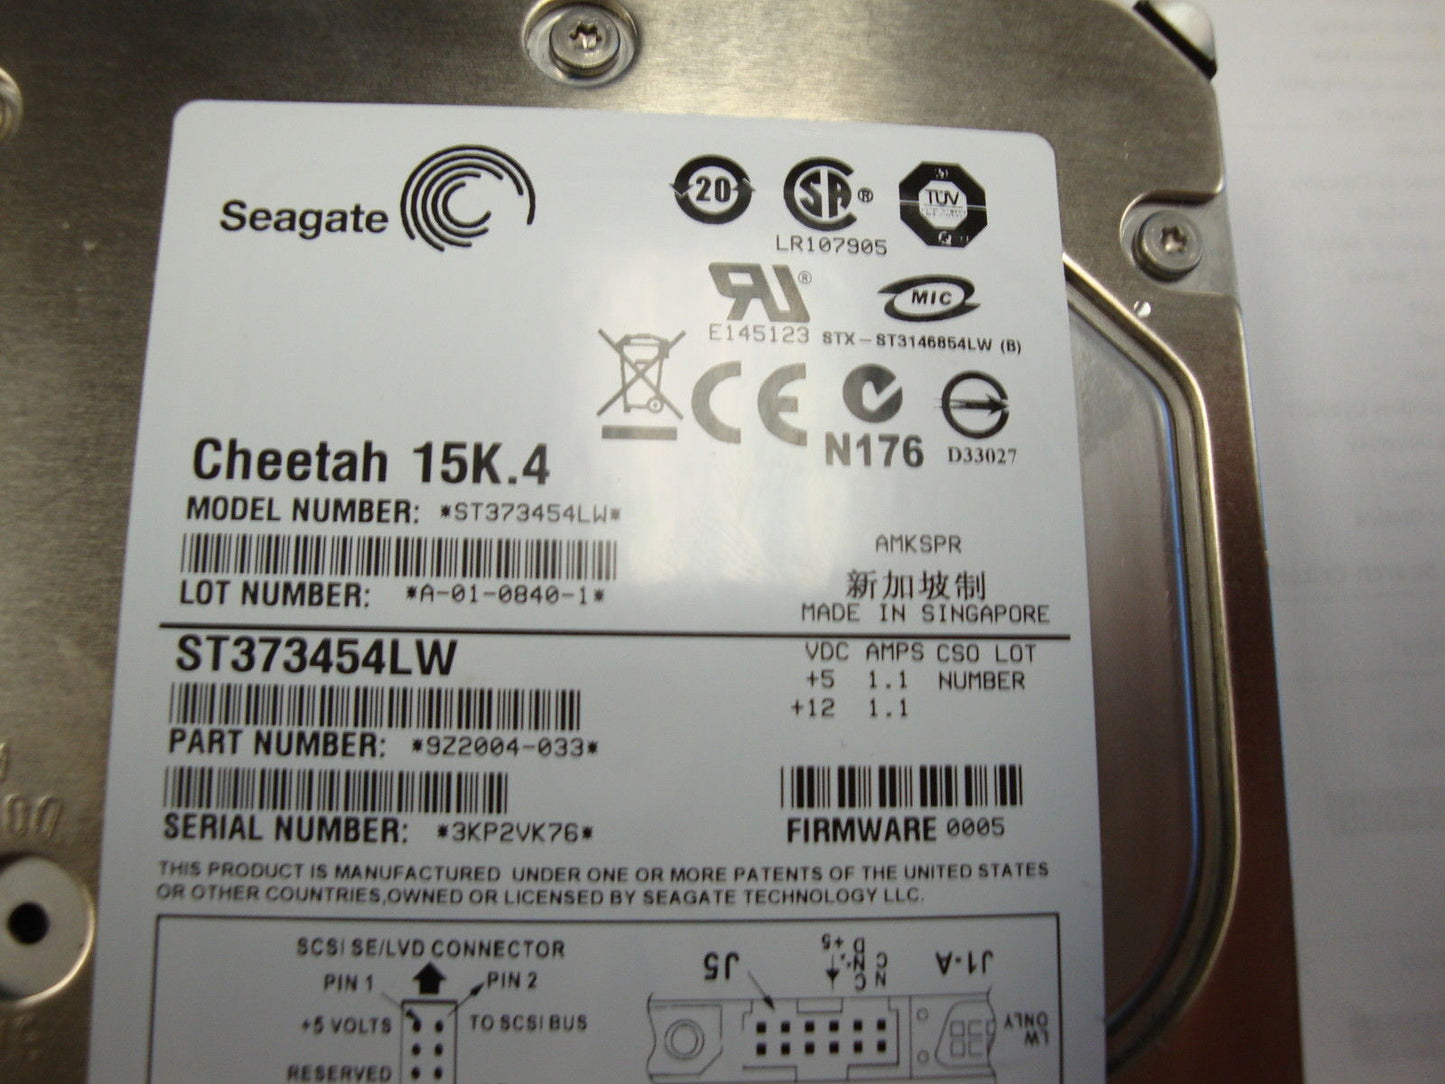 Seagate ST373454LW 15K RPM 73GB FW: 0005 Hard Drive  U320 - Micro Technologies (yourdrives.com)